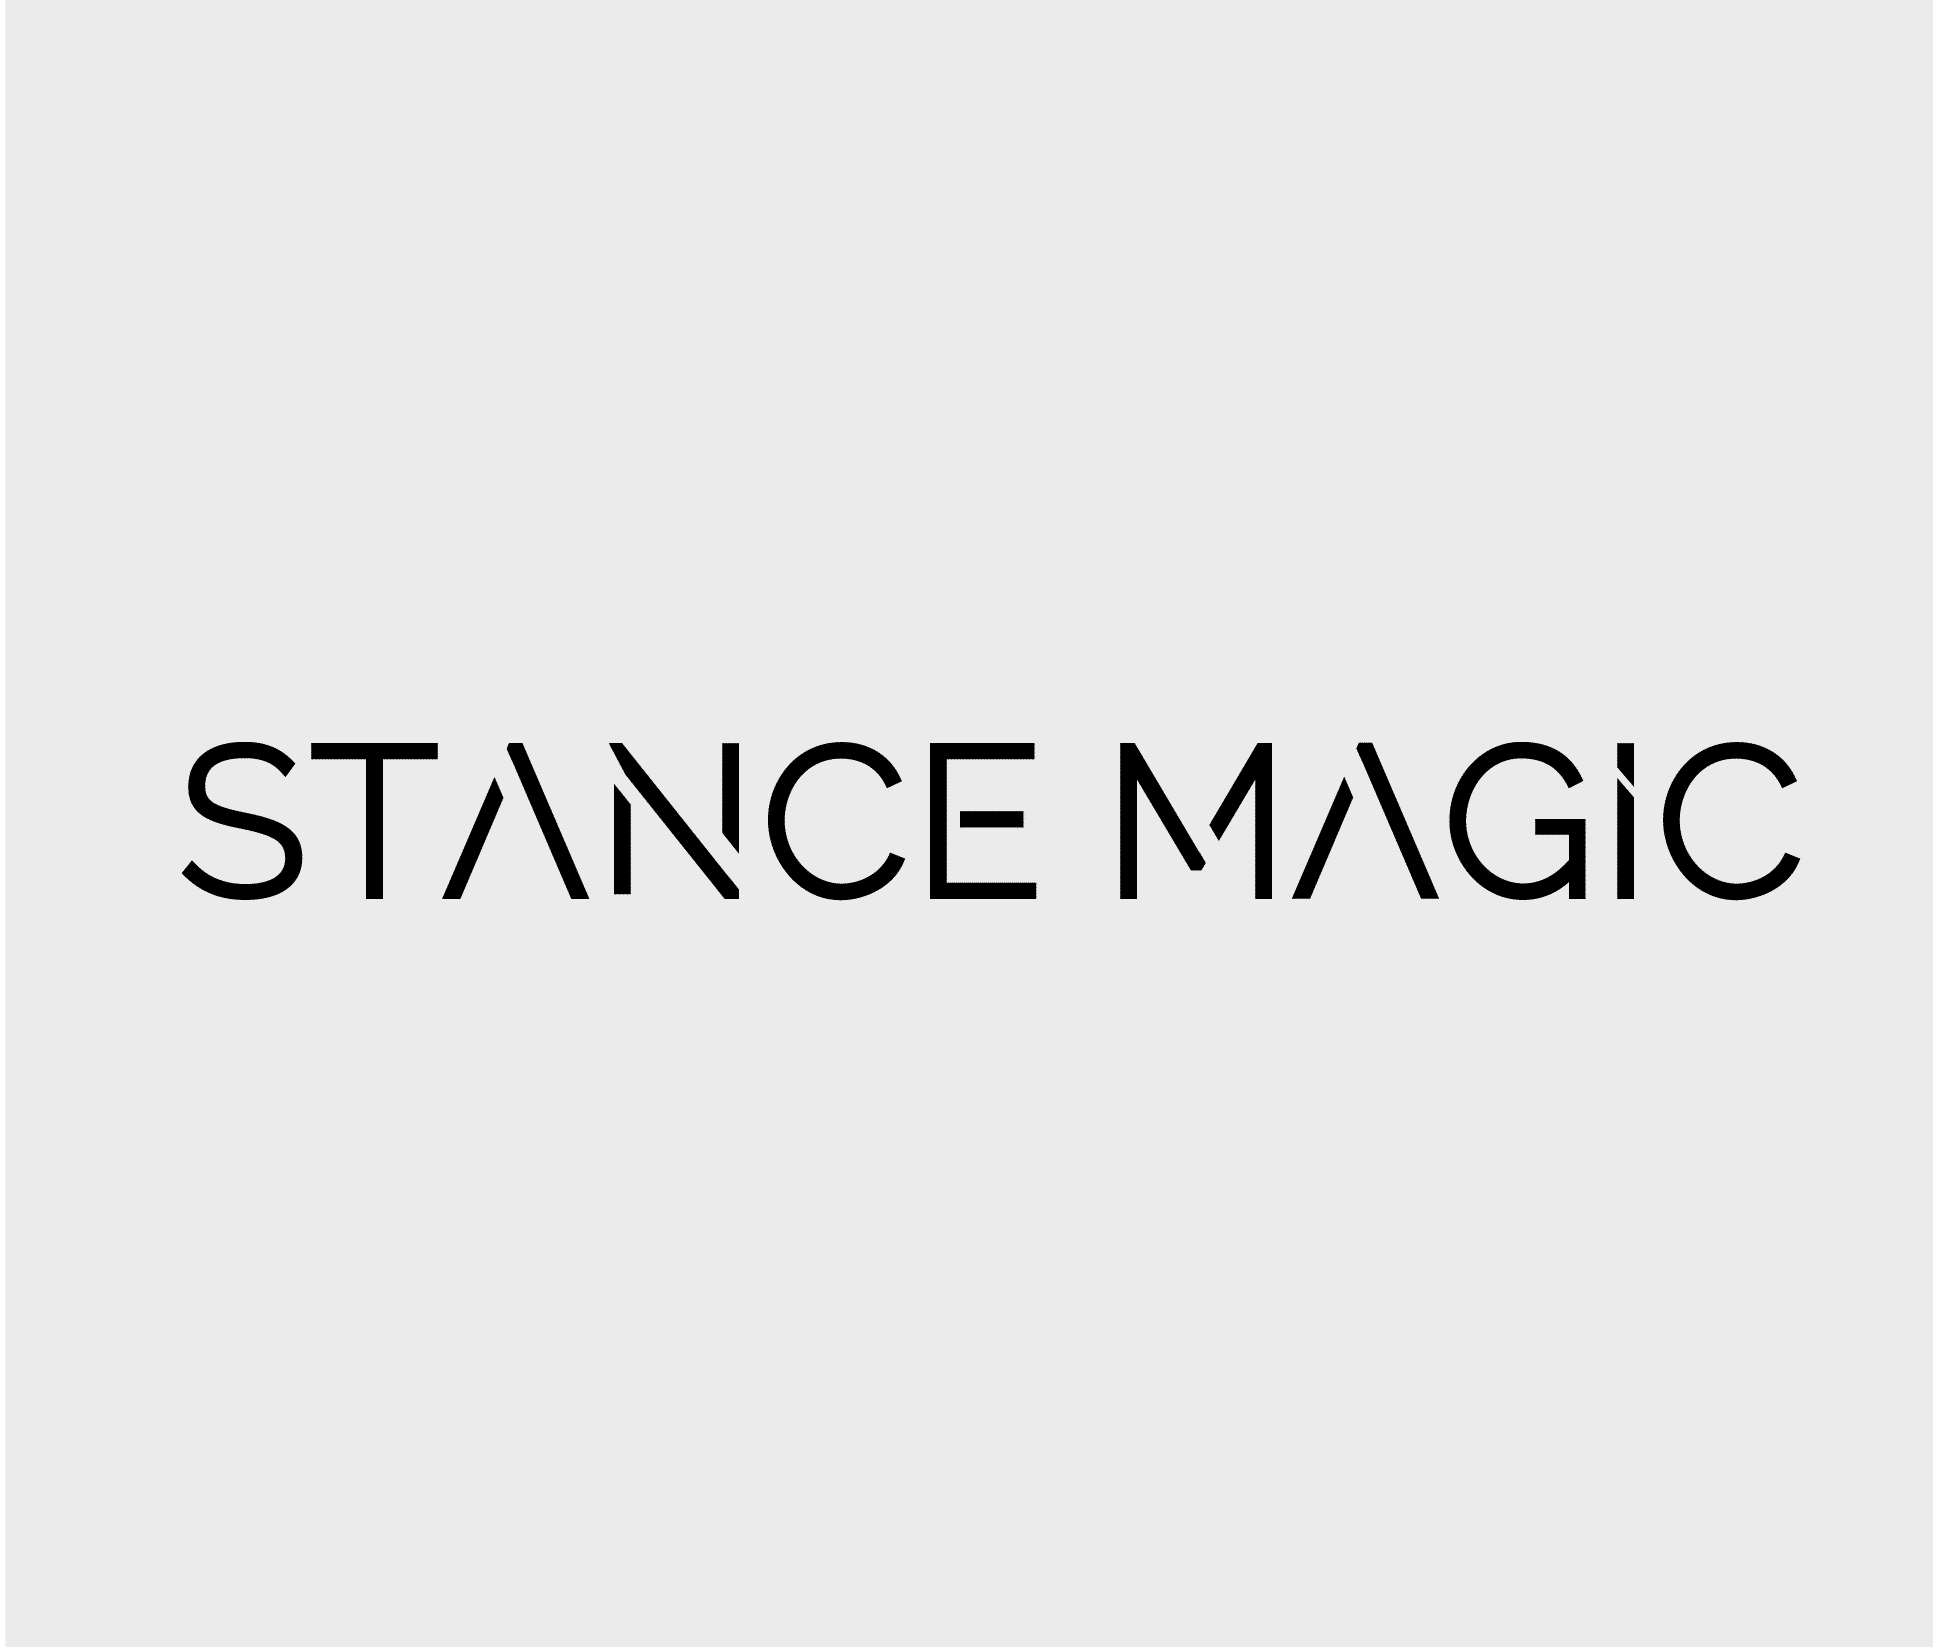 StanceMagic